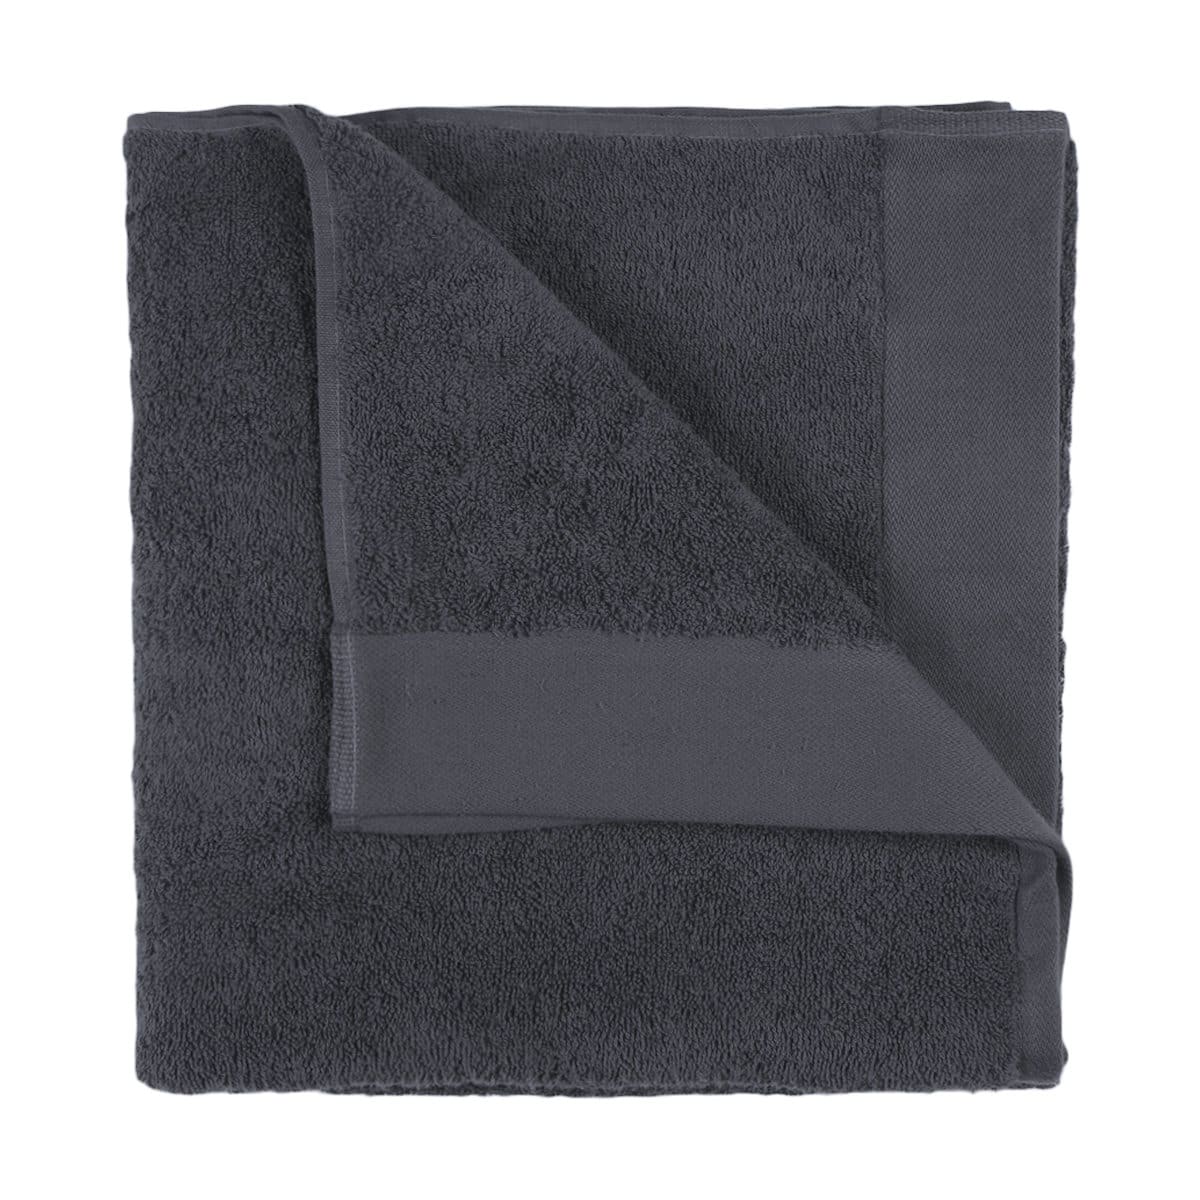 Malmo Cotton Bath Towel - Grey - Kmart